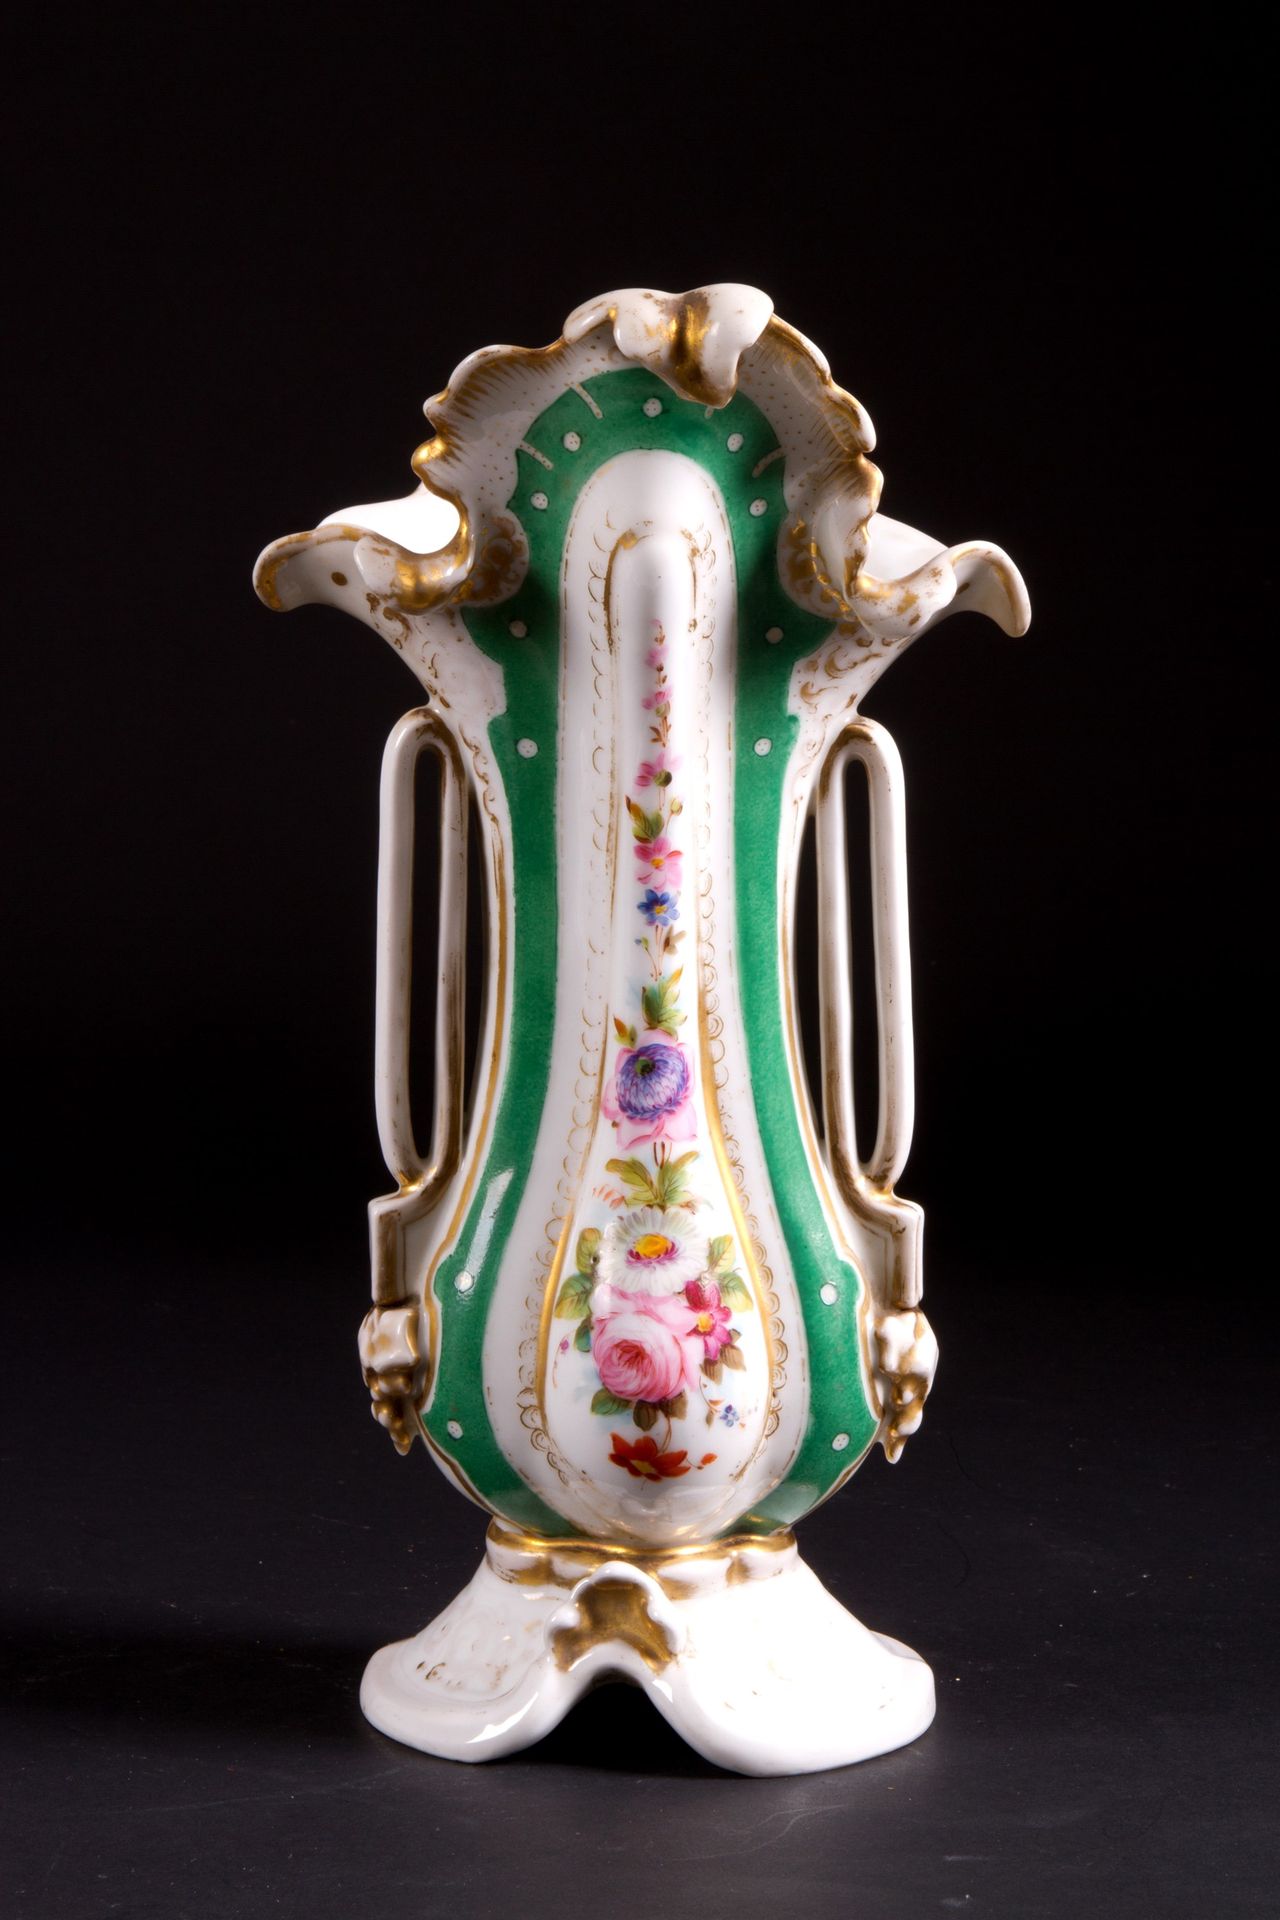 Porcelain jar 白瓷花瓶，有多色花卉装饰。19世纪。31x17x15厘米左右。